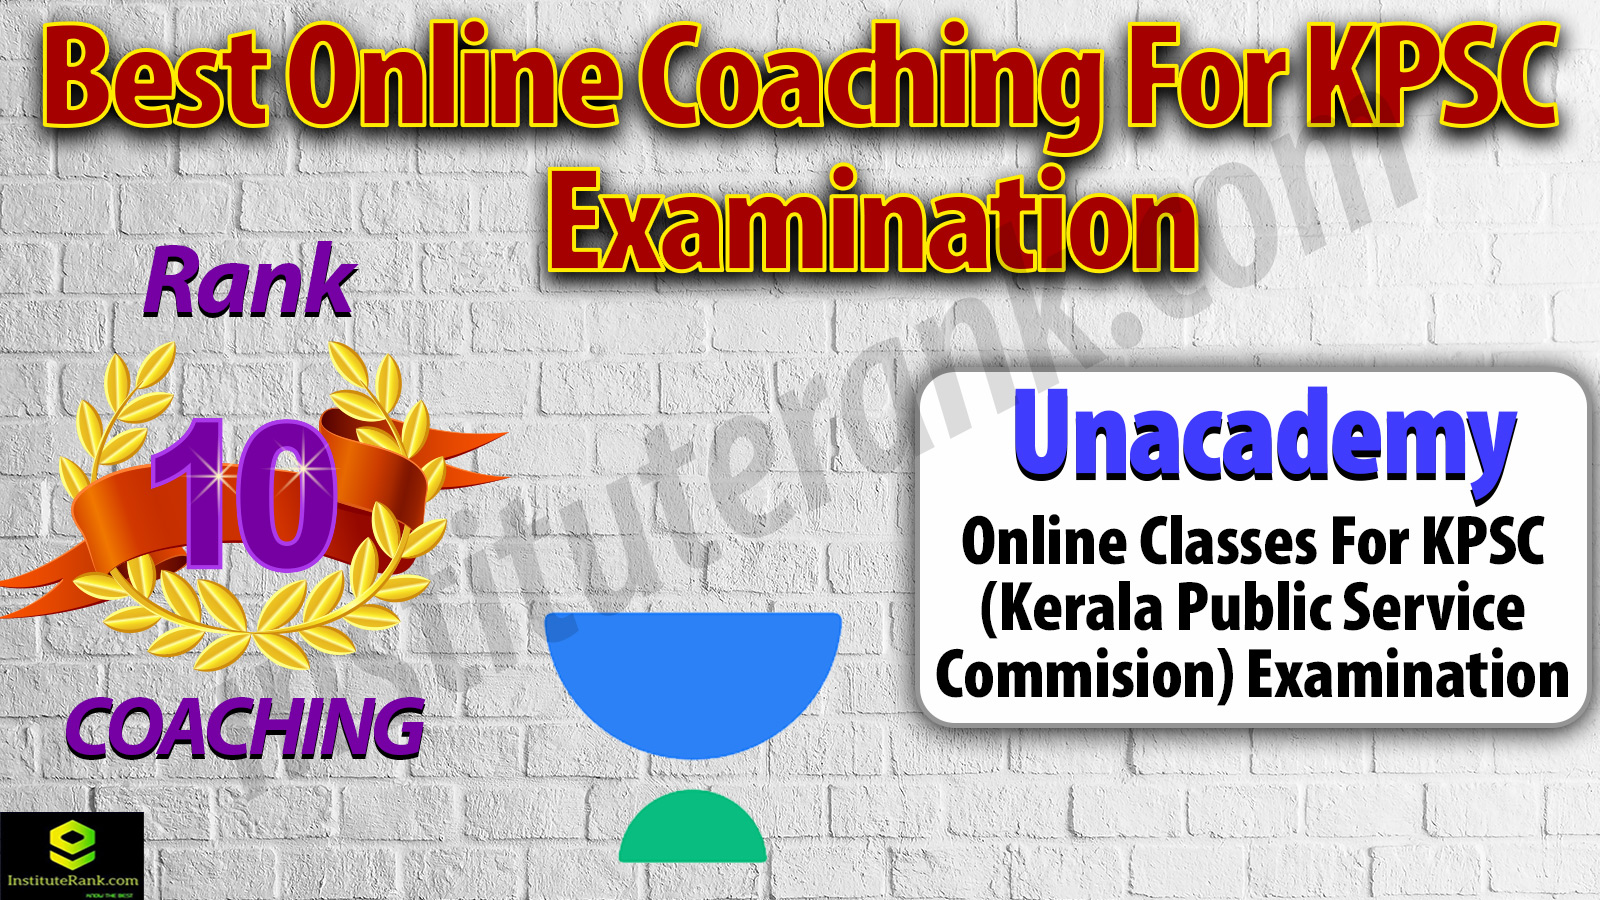 Online Coaching Centre for KPSC Exam